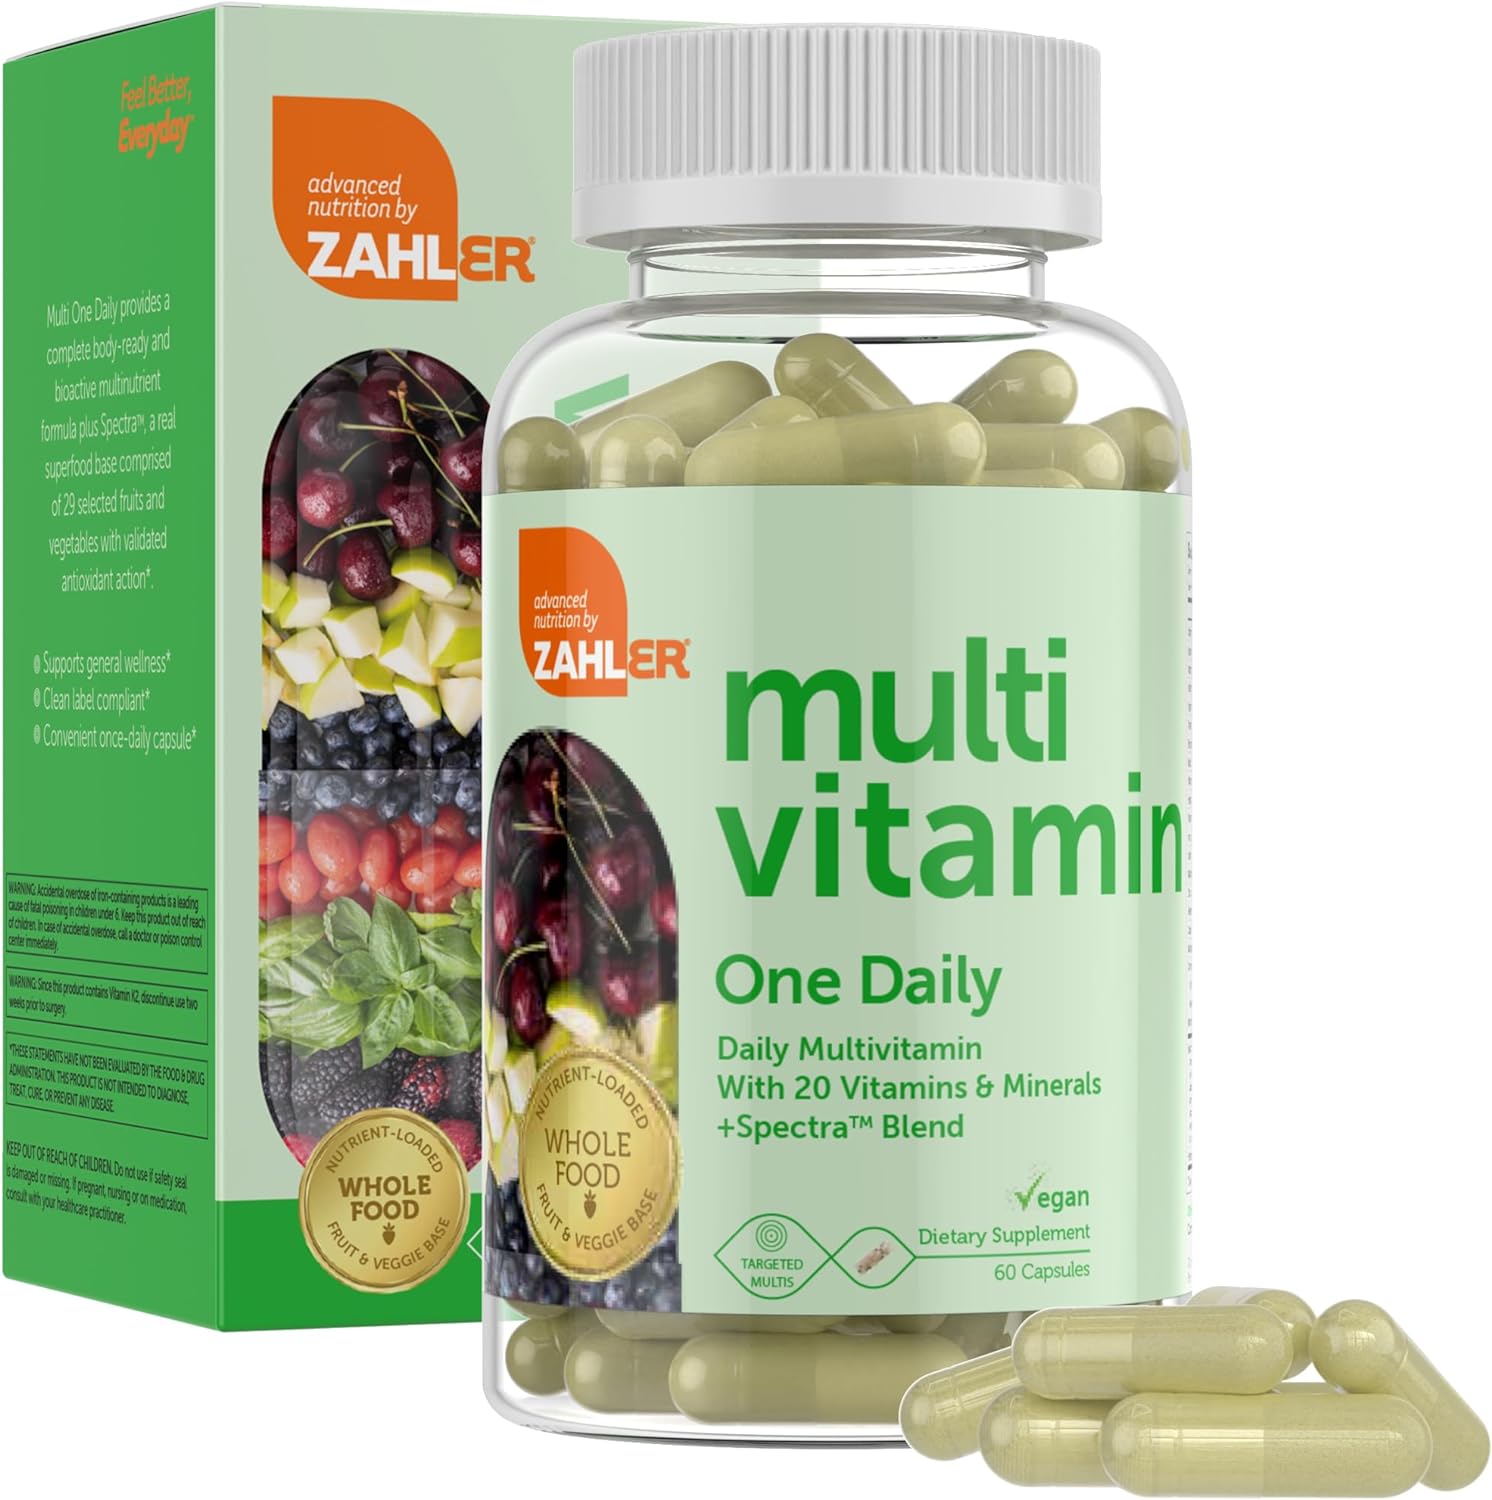 Zahler Multivitamin One Daily, Daily Multivitamin with 20 Vitamin & Mi